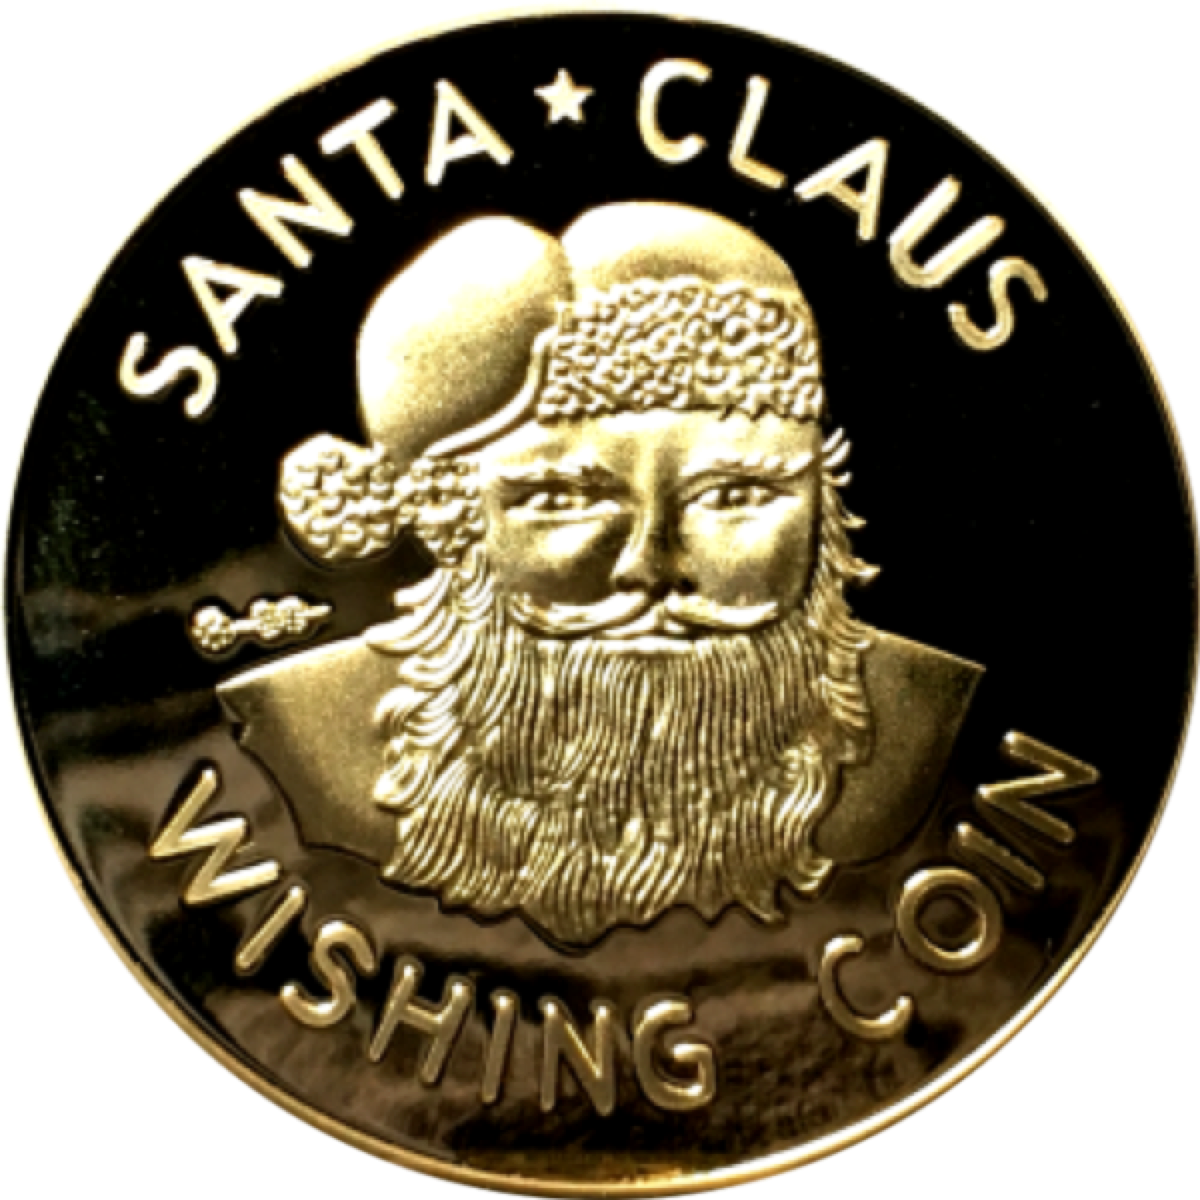 Santa Claus Wishing Coin